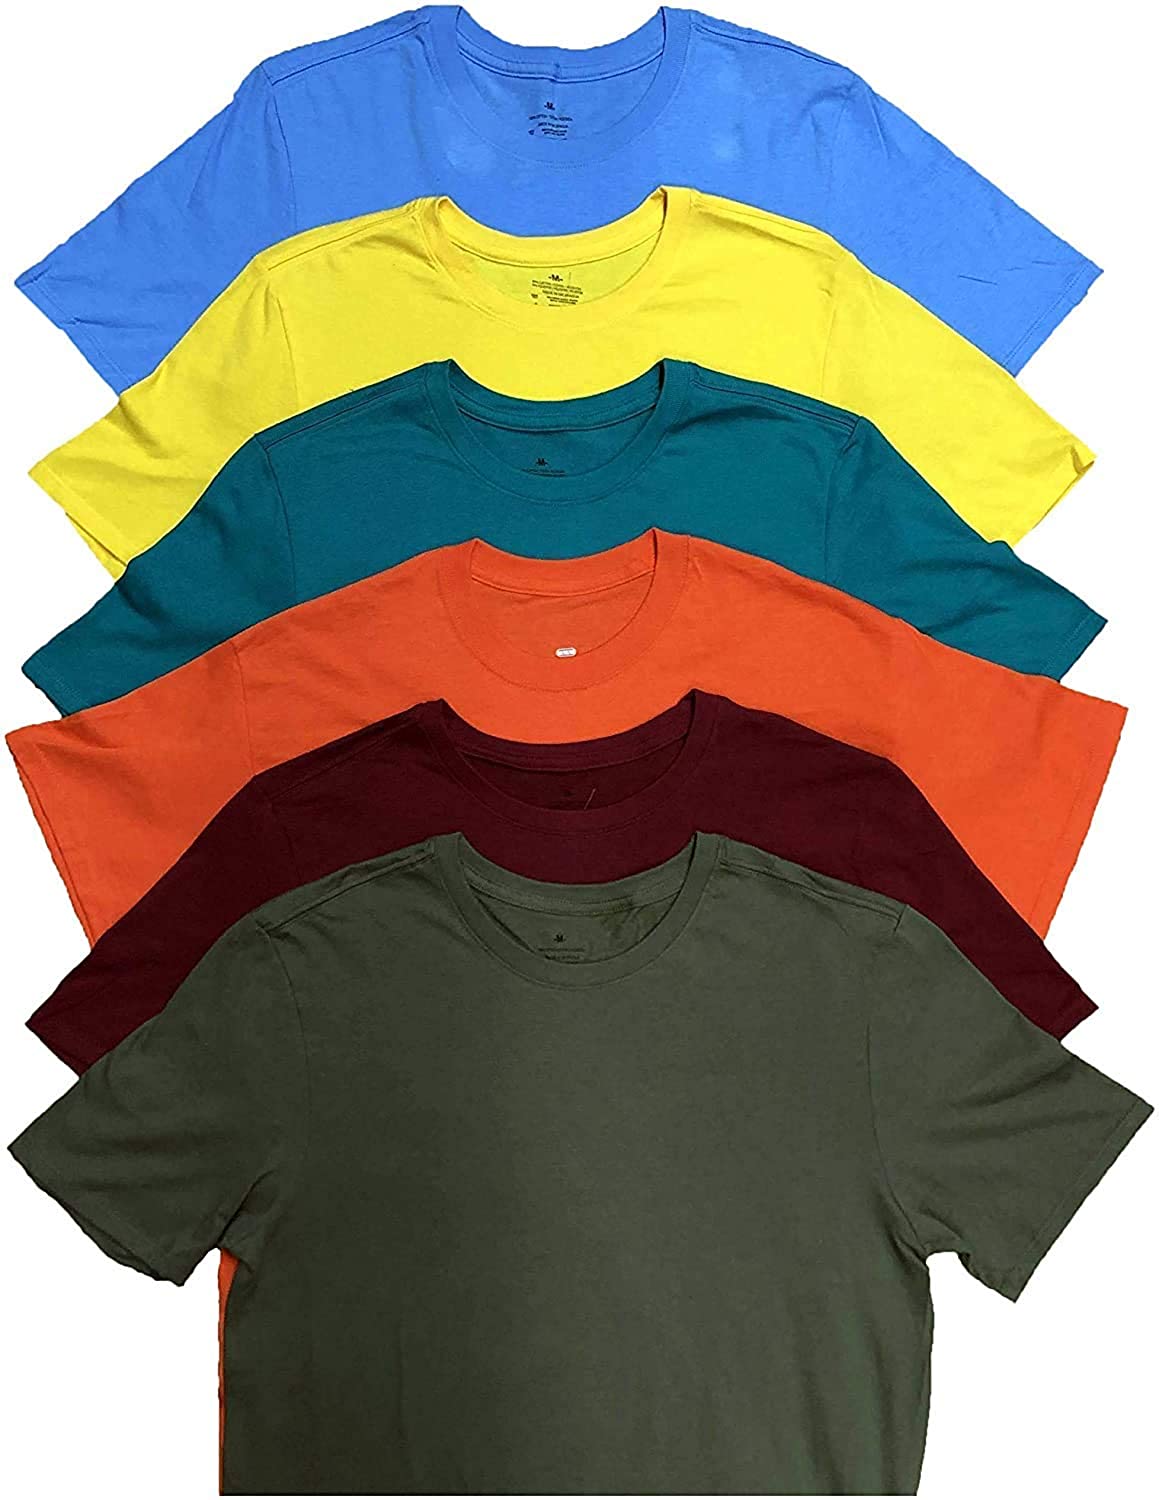 Men's Cotton Crew Neck Short Sleeve T-Shirts, Bulk Tshirt Color Mix - image 2 of 3